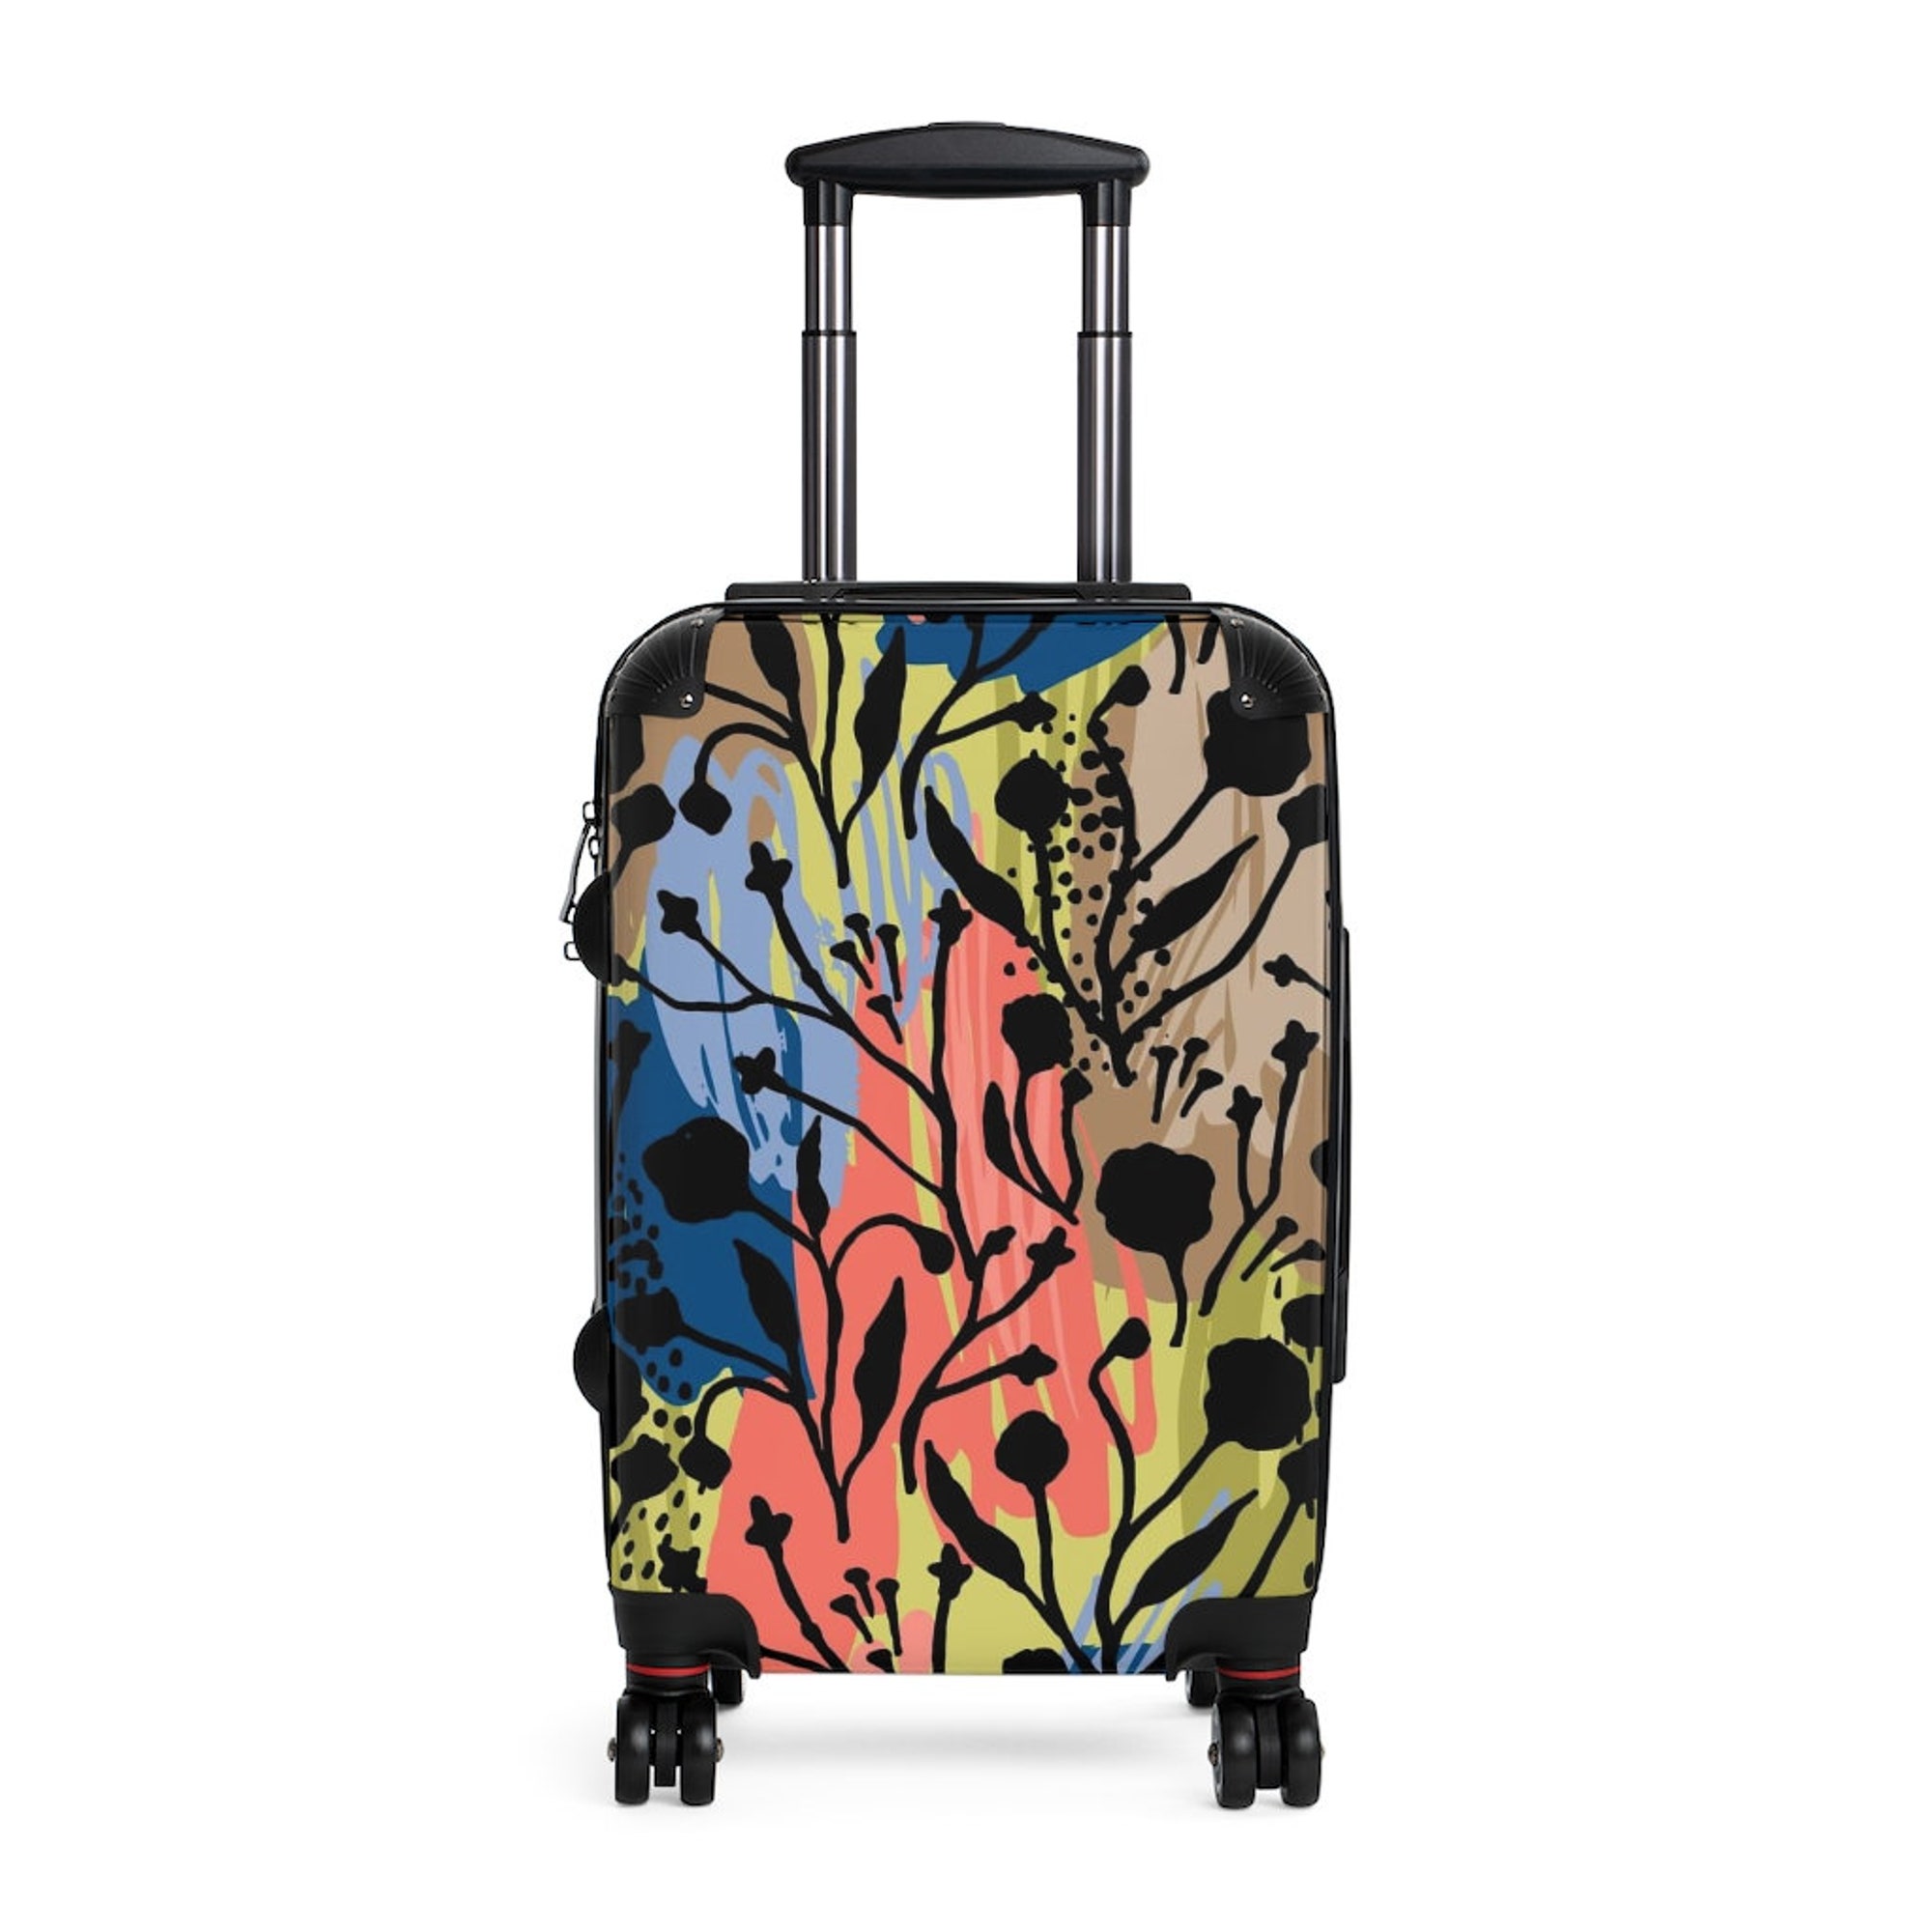 The Dahlia Suitcase